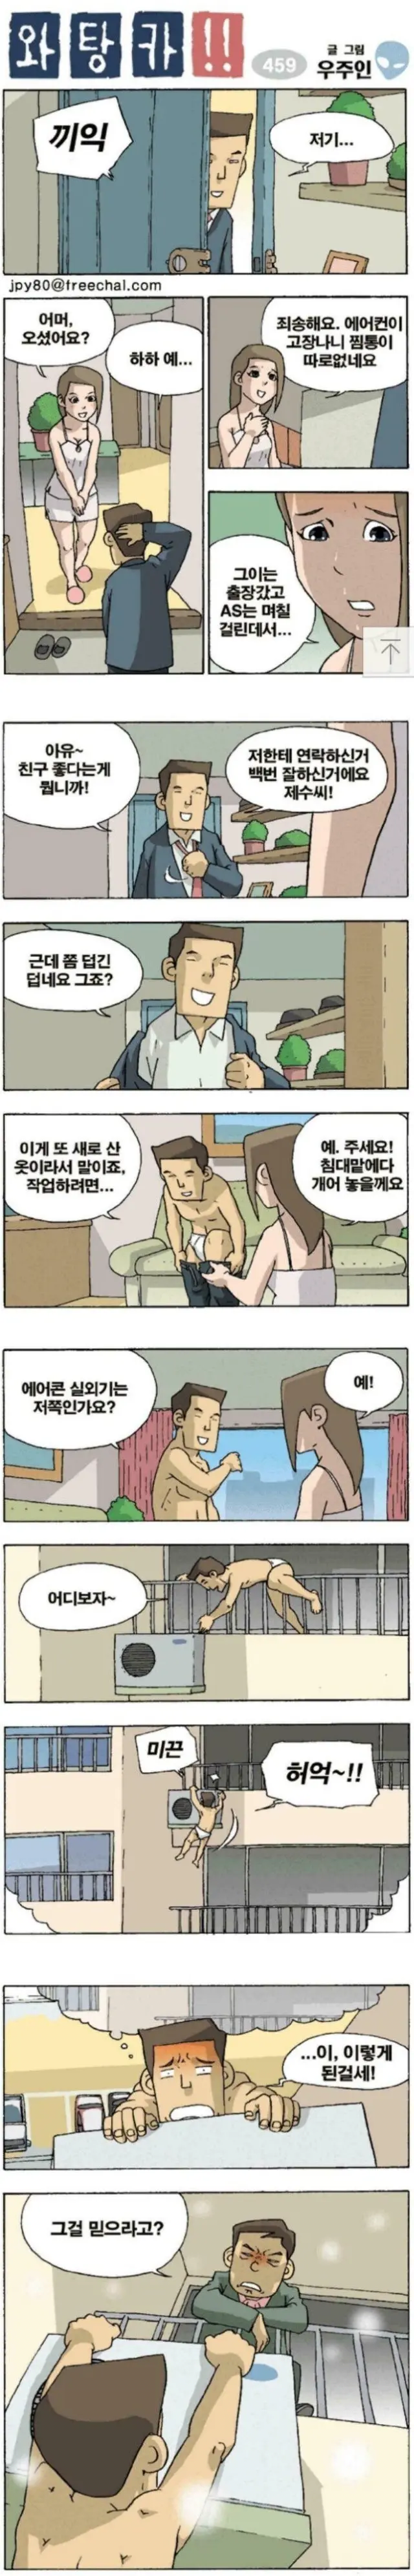 NTR로 오해받는 만화 | mbong.kr 엠봉